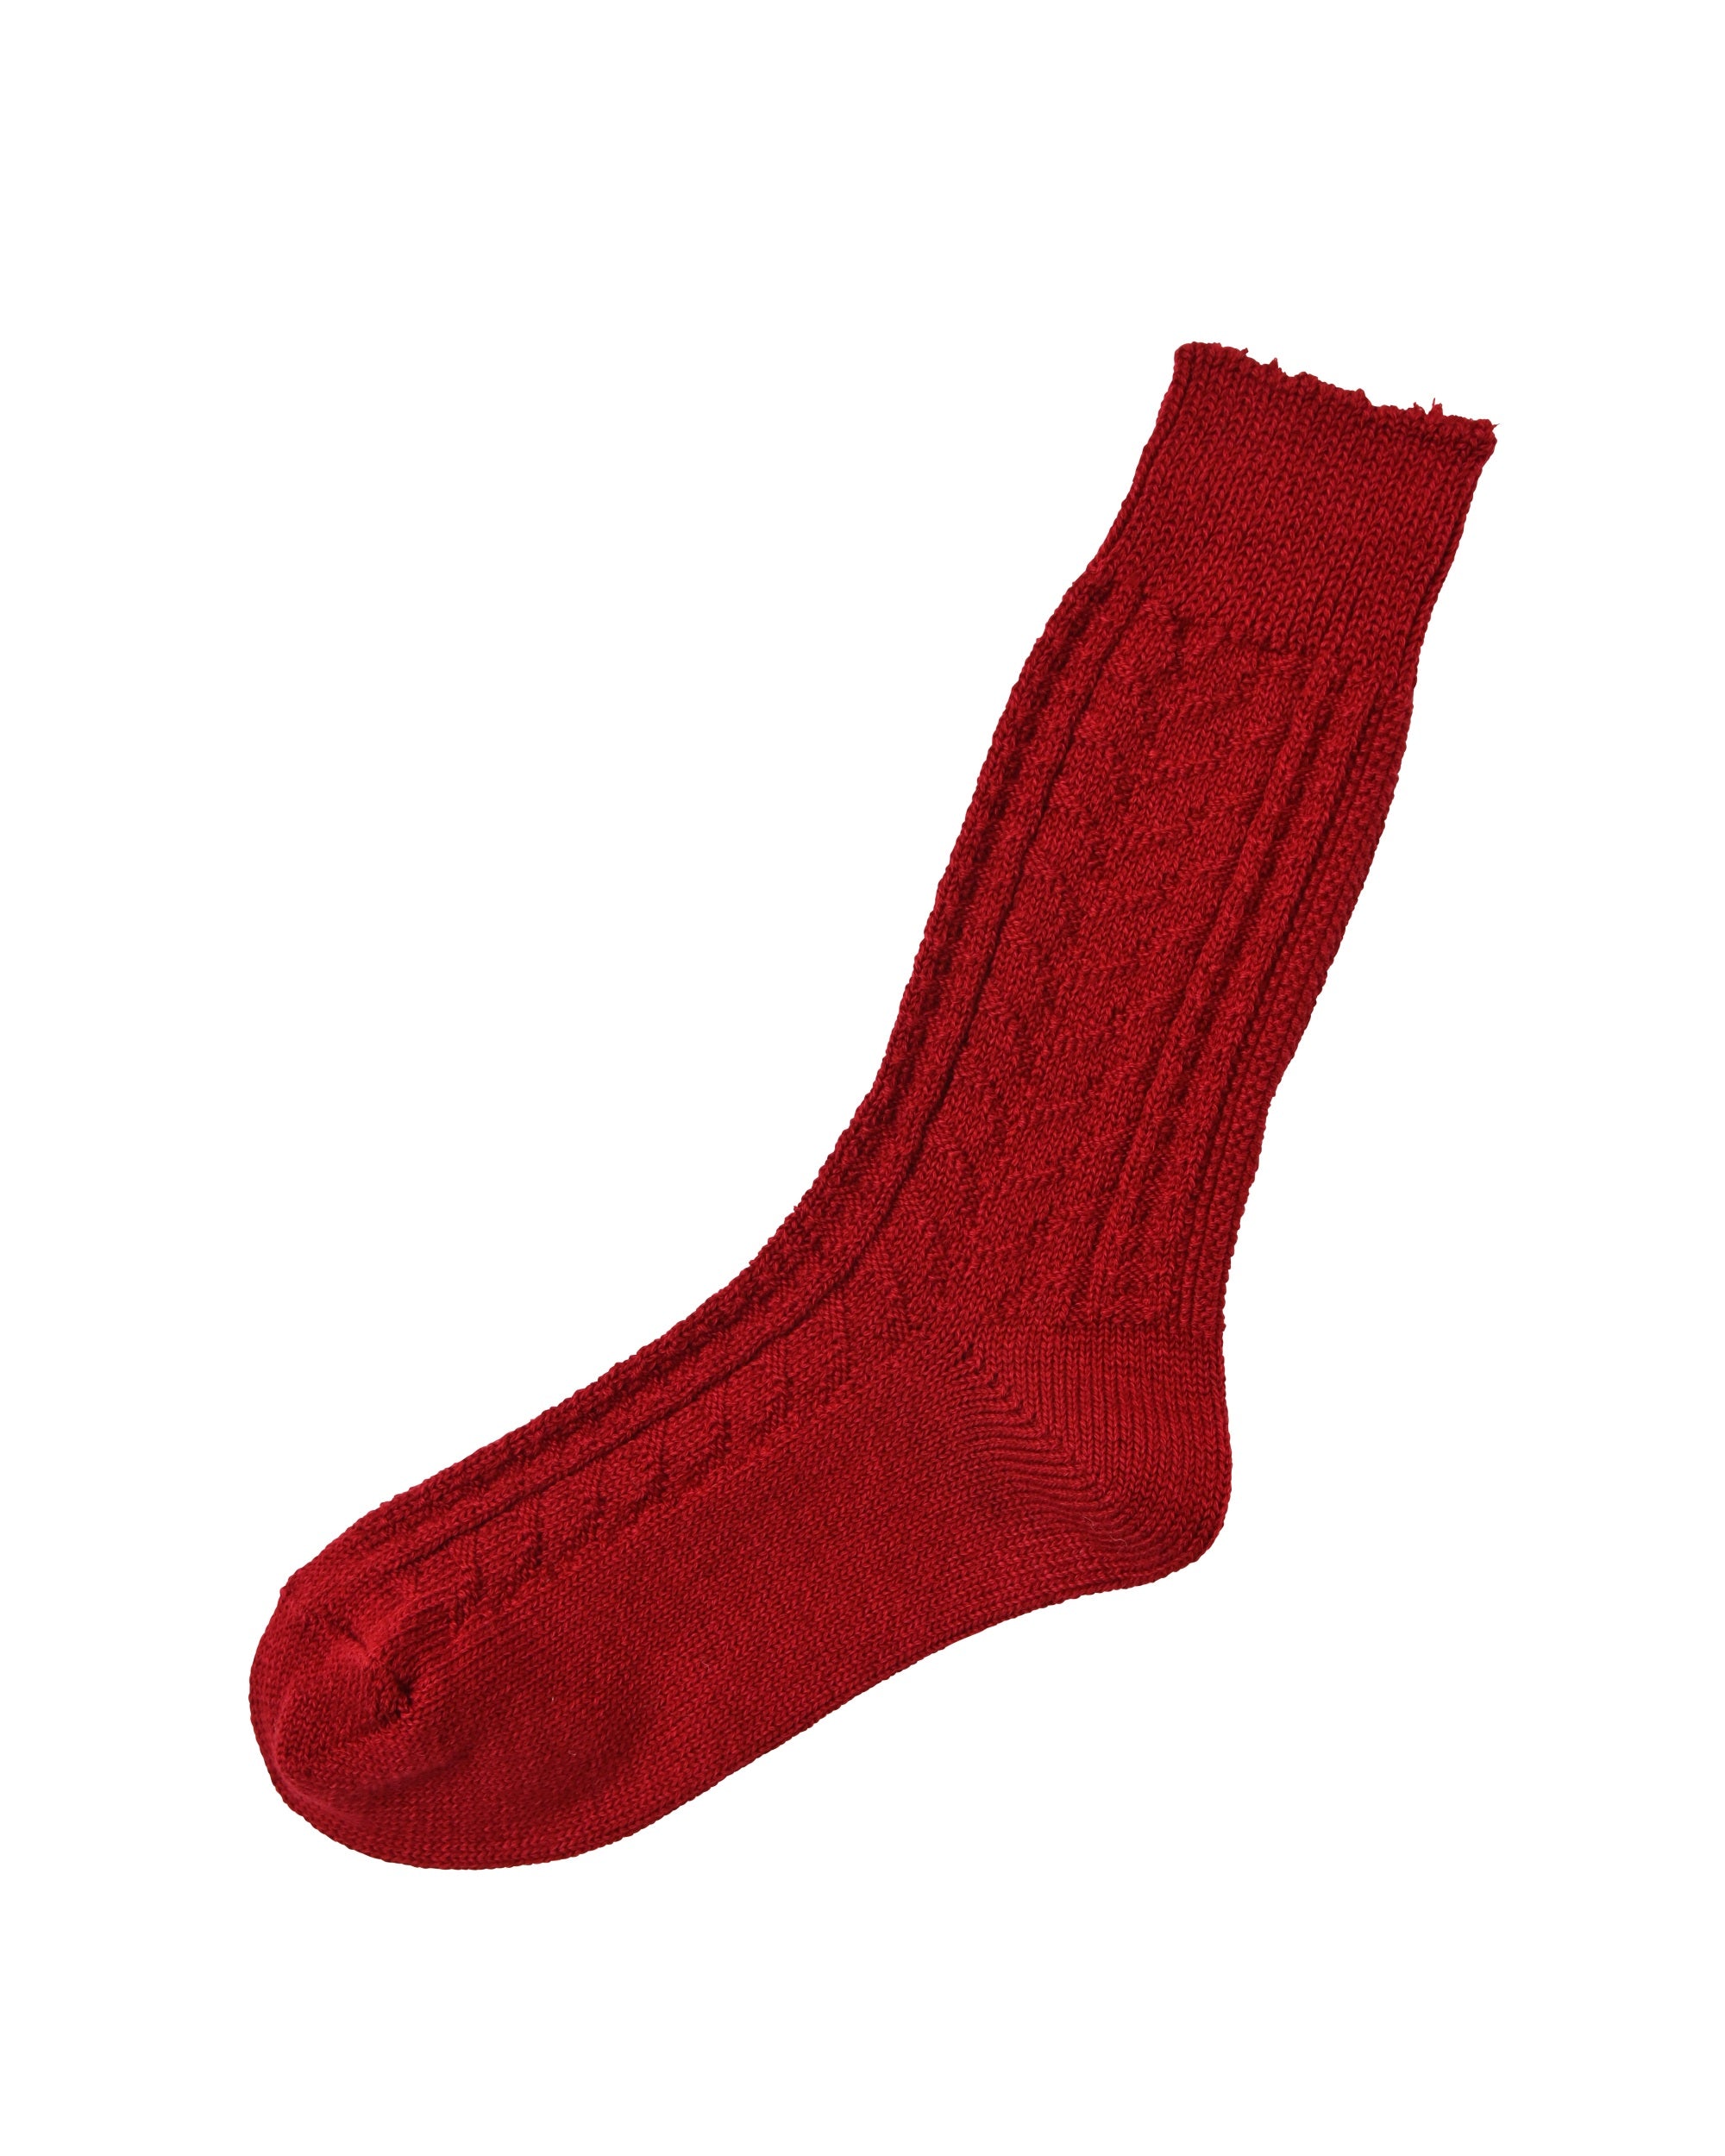 memeri : wool cotton cable socks, the maker hobart